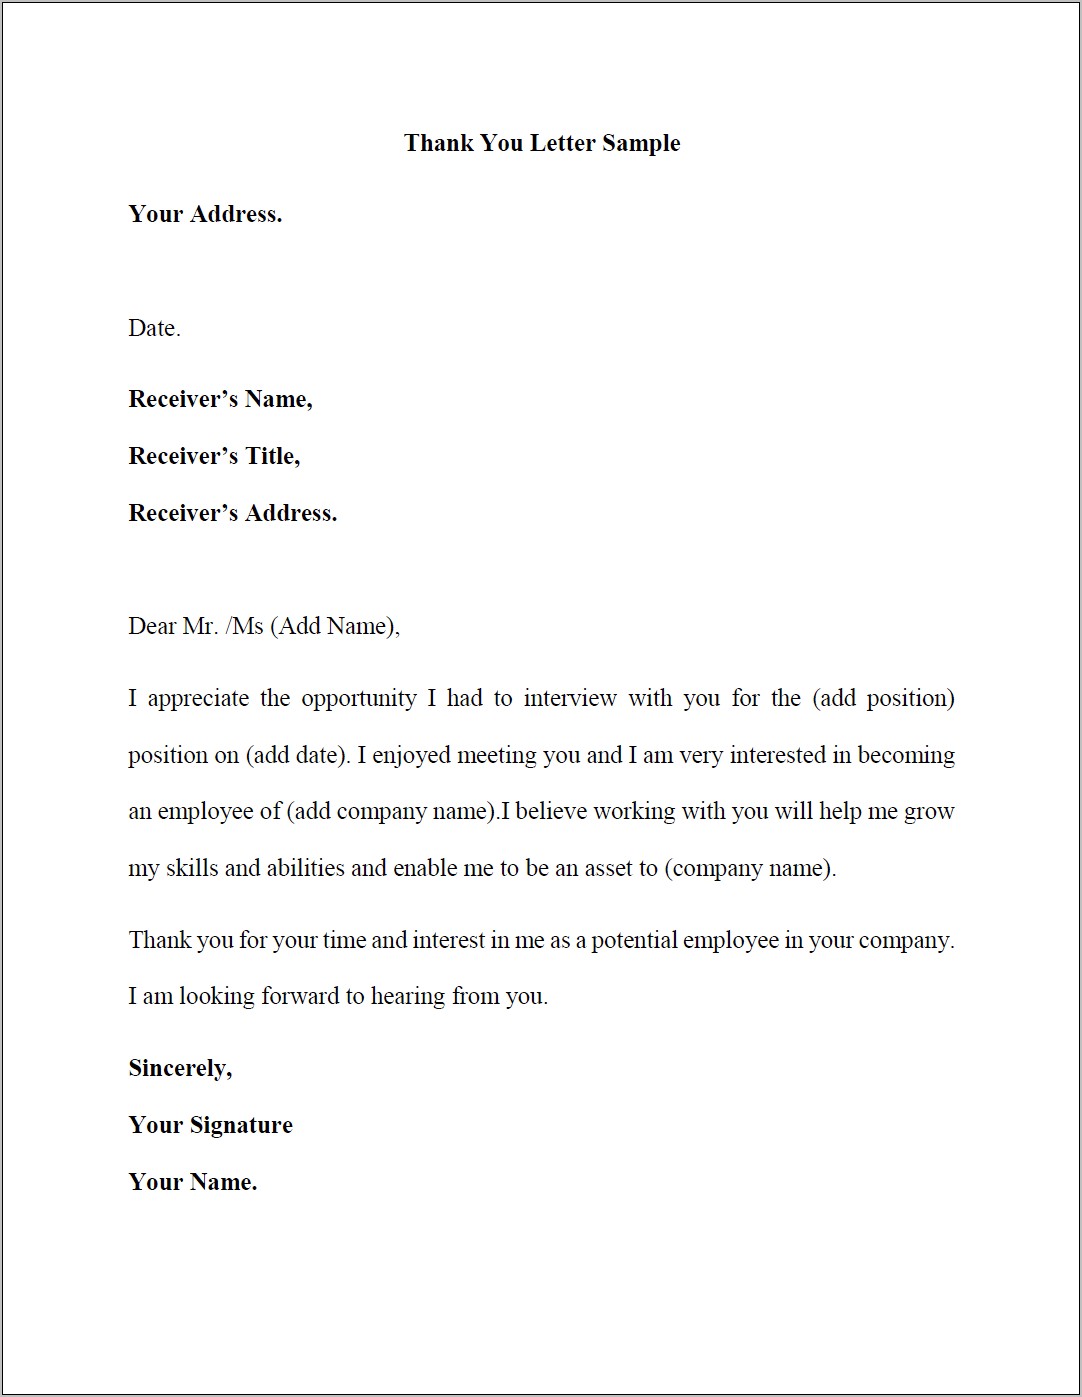 Resume Thank You Letter Sample